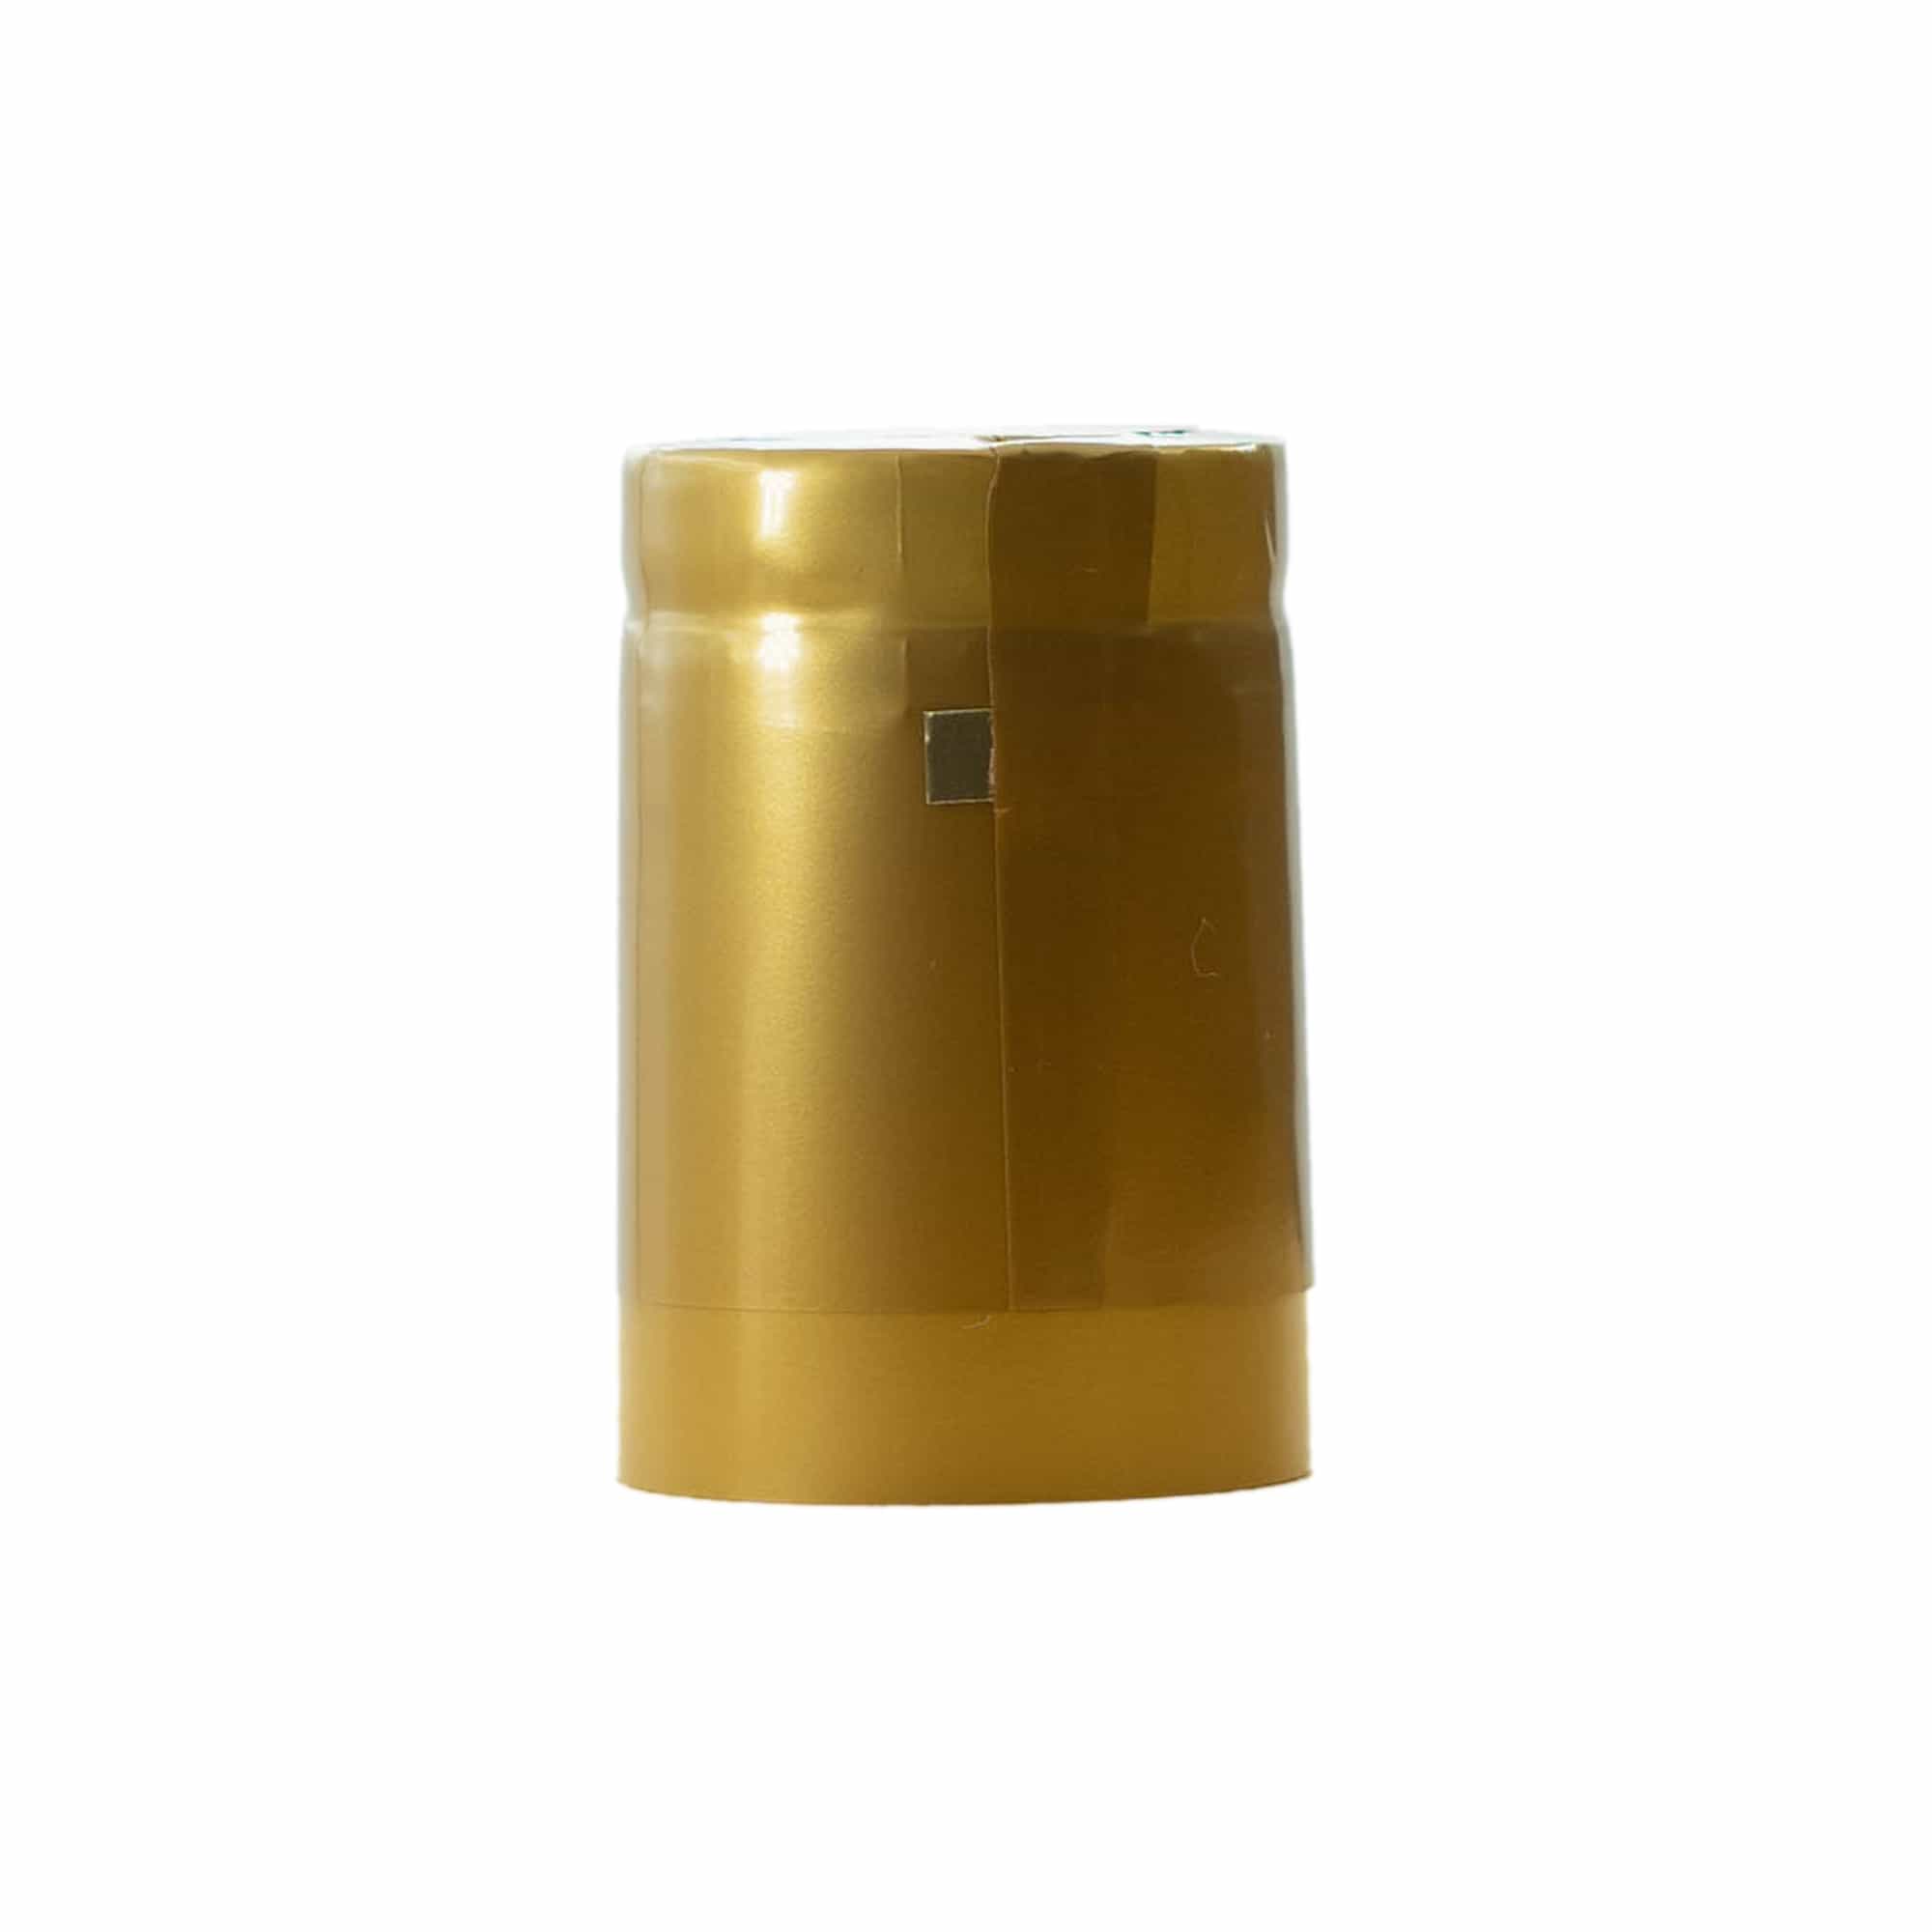 Heat shrink capsule 32x41, PVC plastic, gold